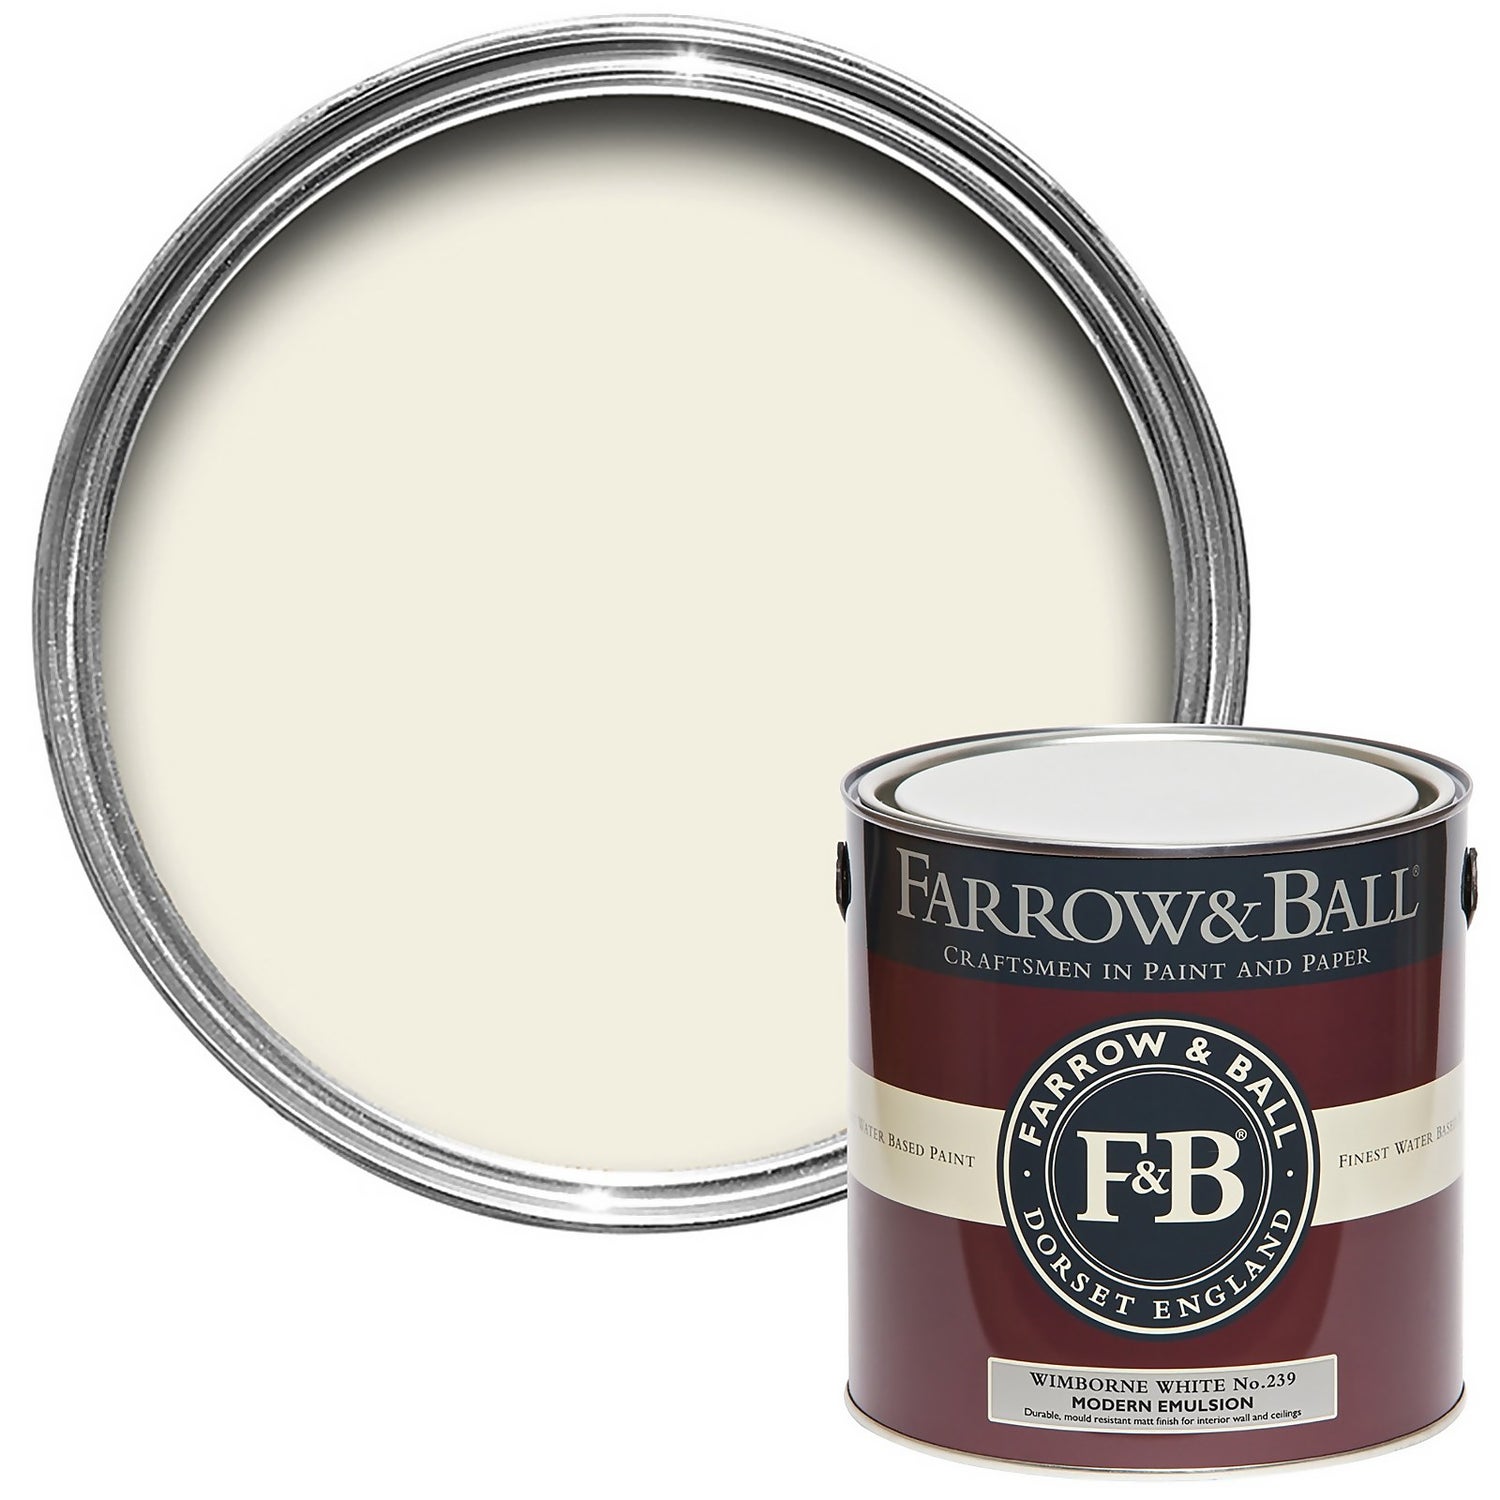 Farrow & Ball Angled Paint Brush